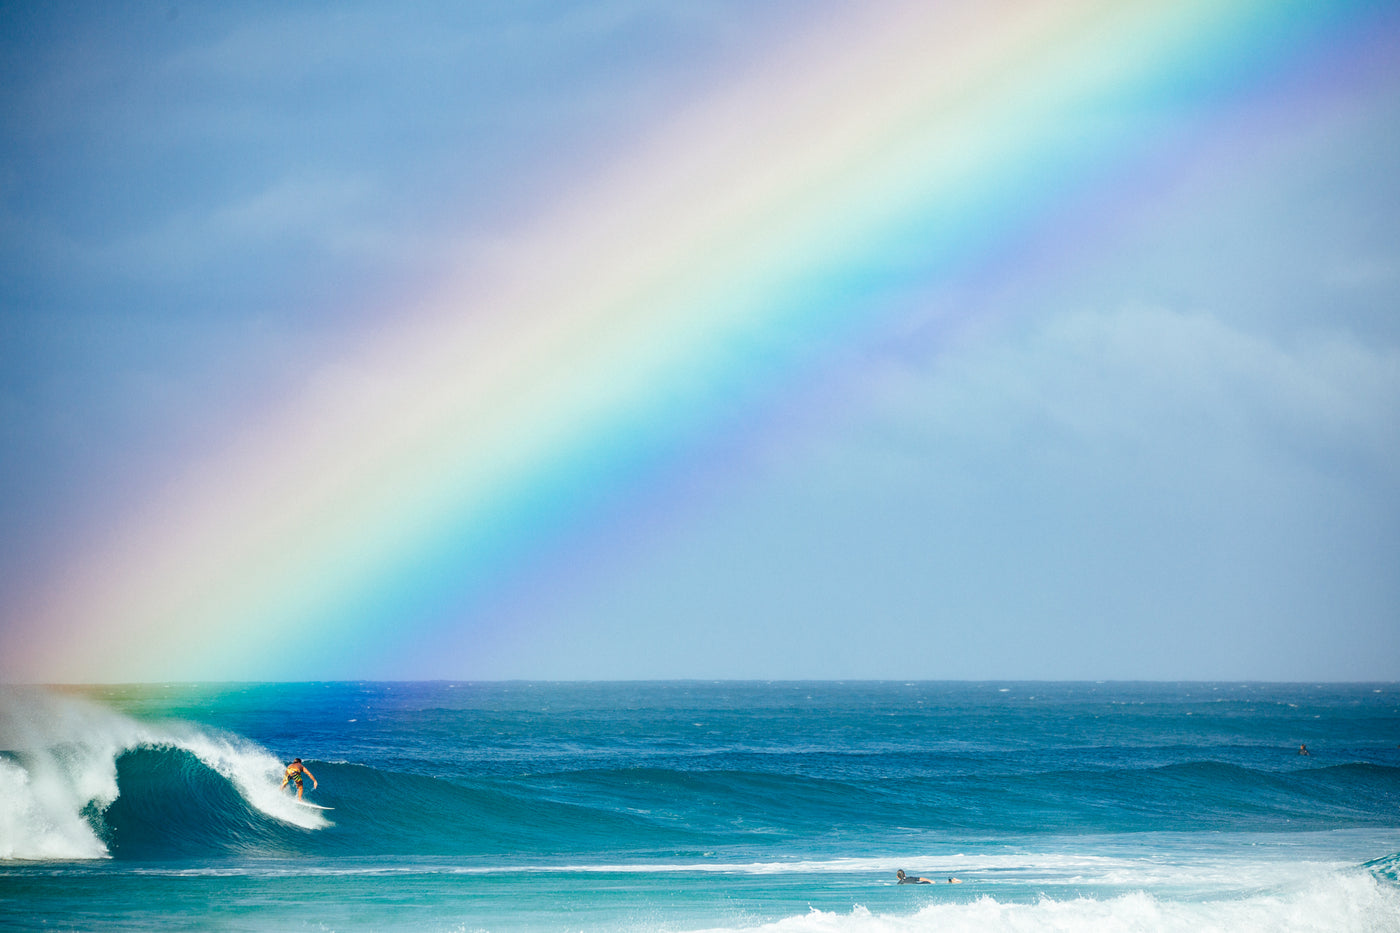 Surf The Rainbow / North Shore, Oahu, Hawaii